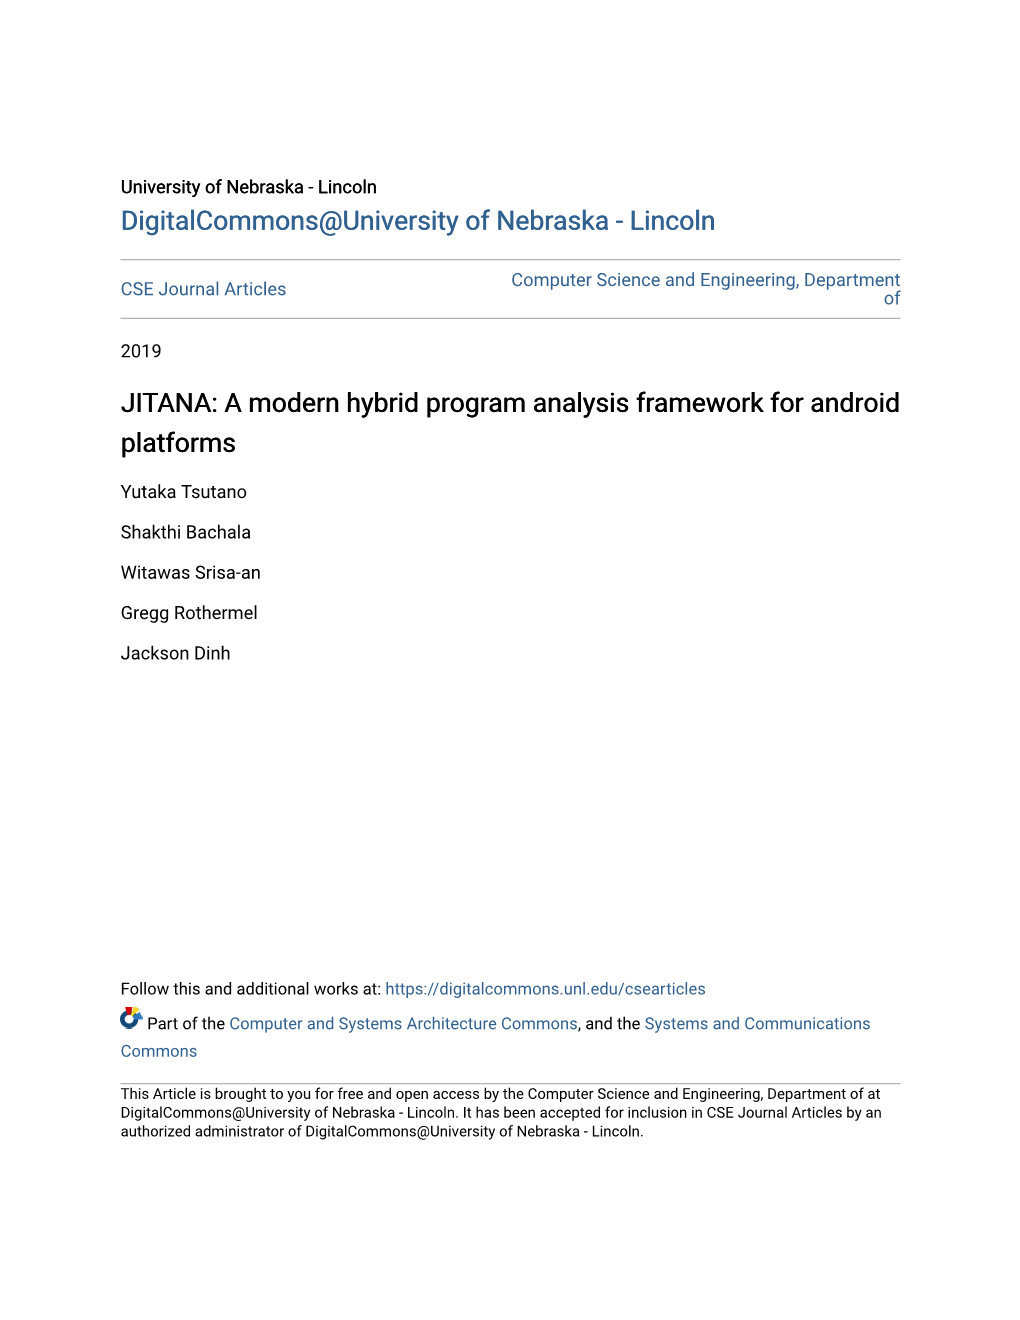 JITANA: a Modern Hybrid Program Analysis Framework for Android Platforms